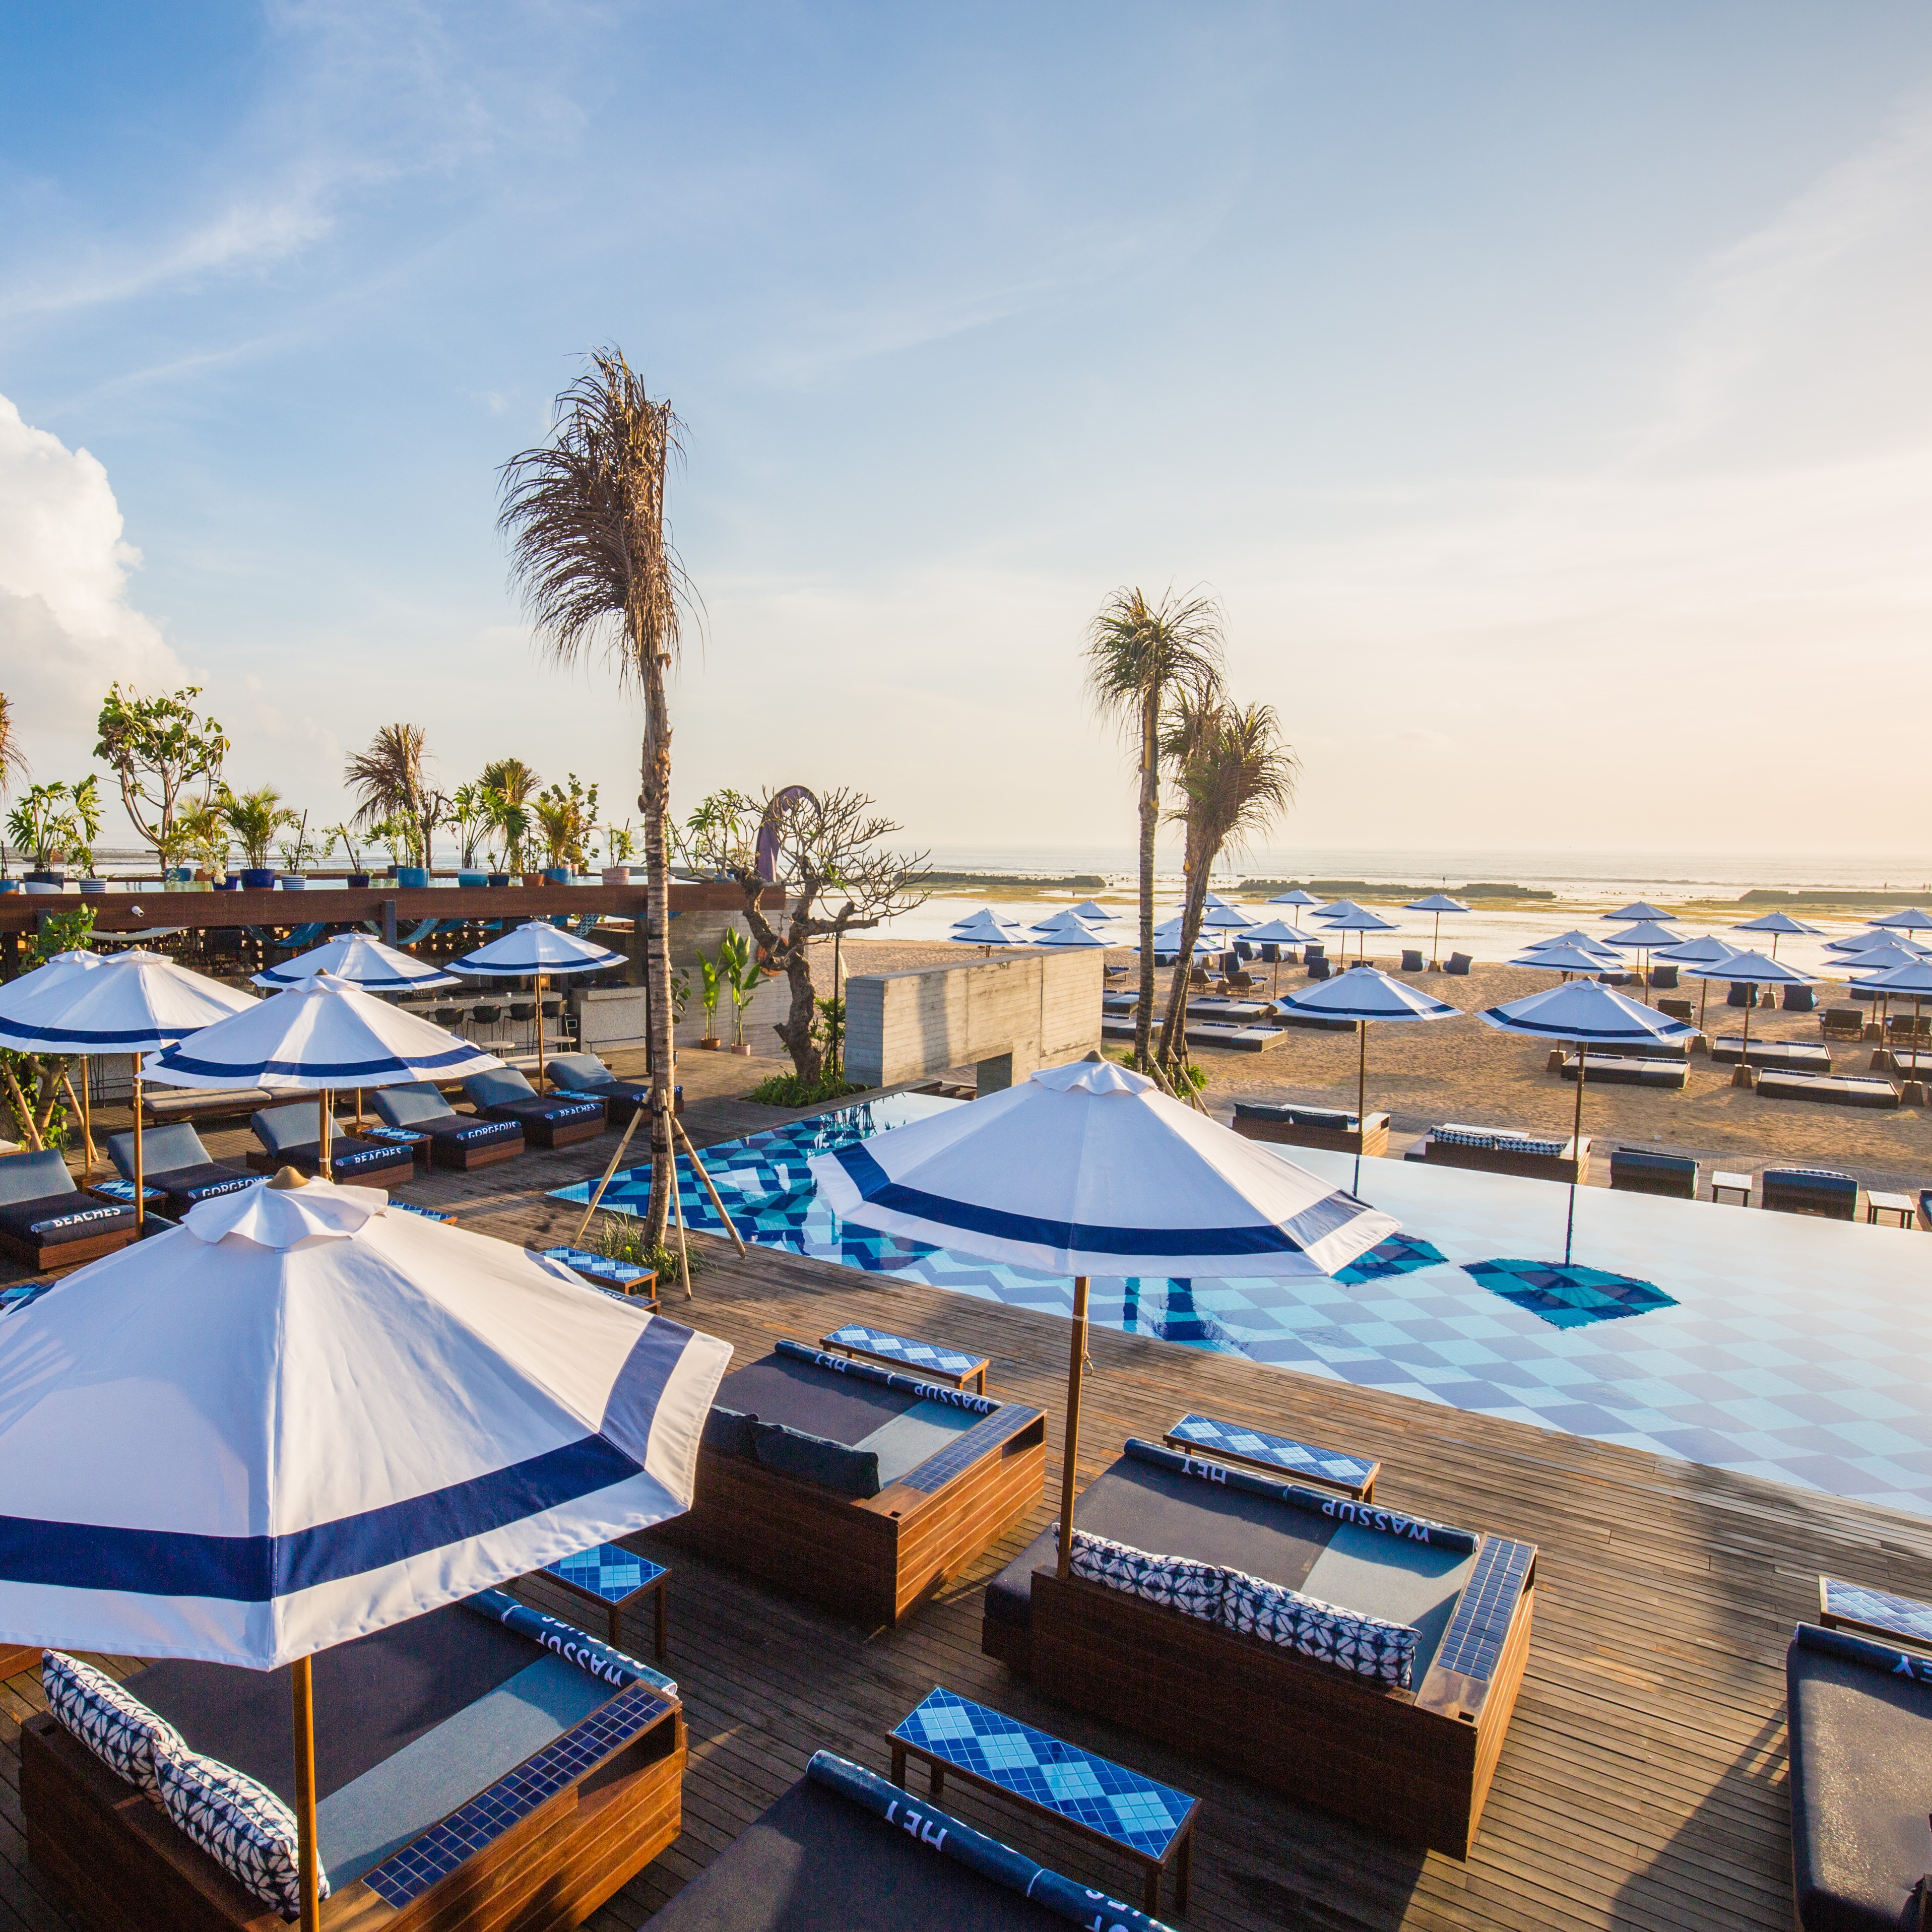 best beach clubs in Bali